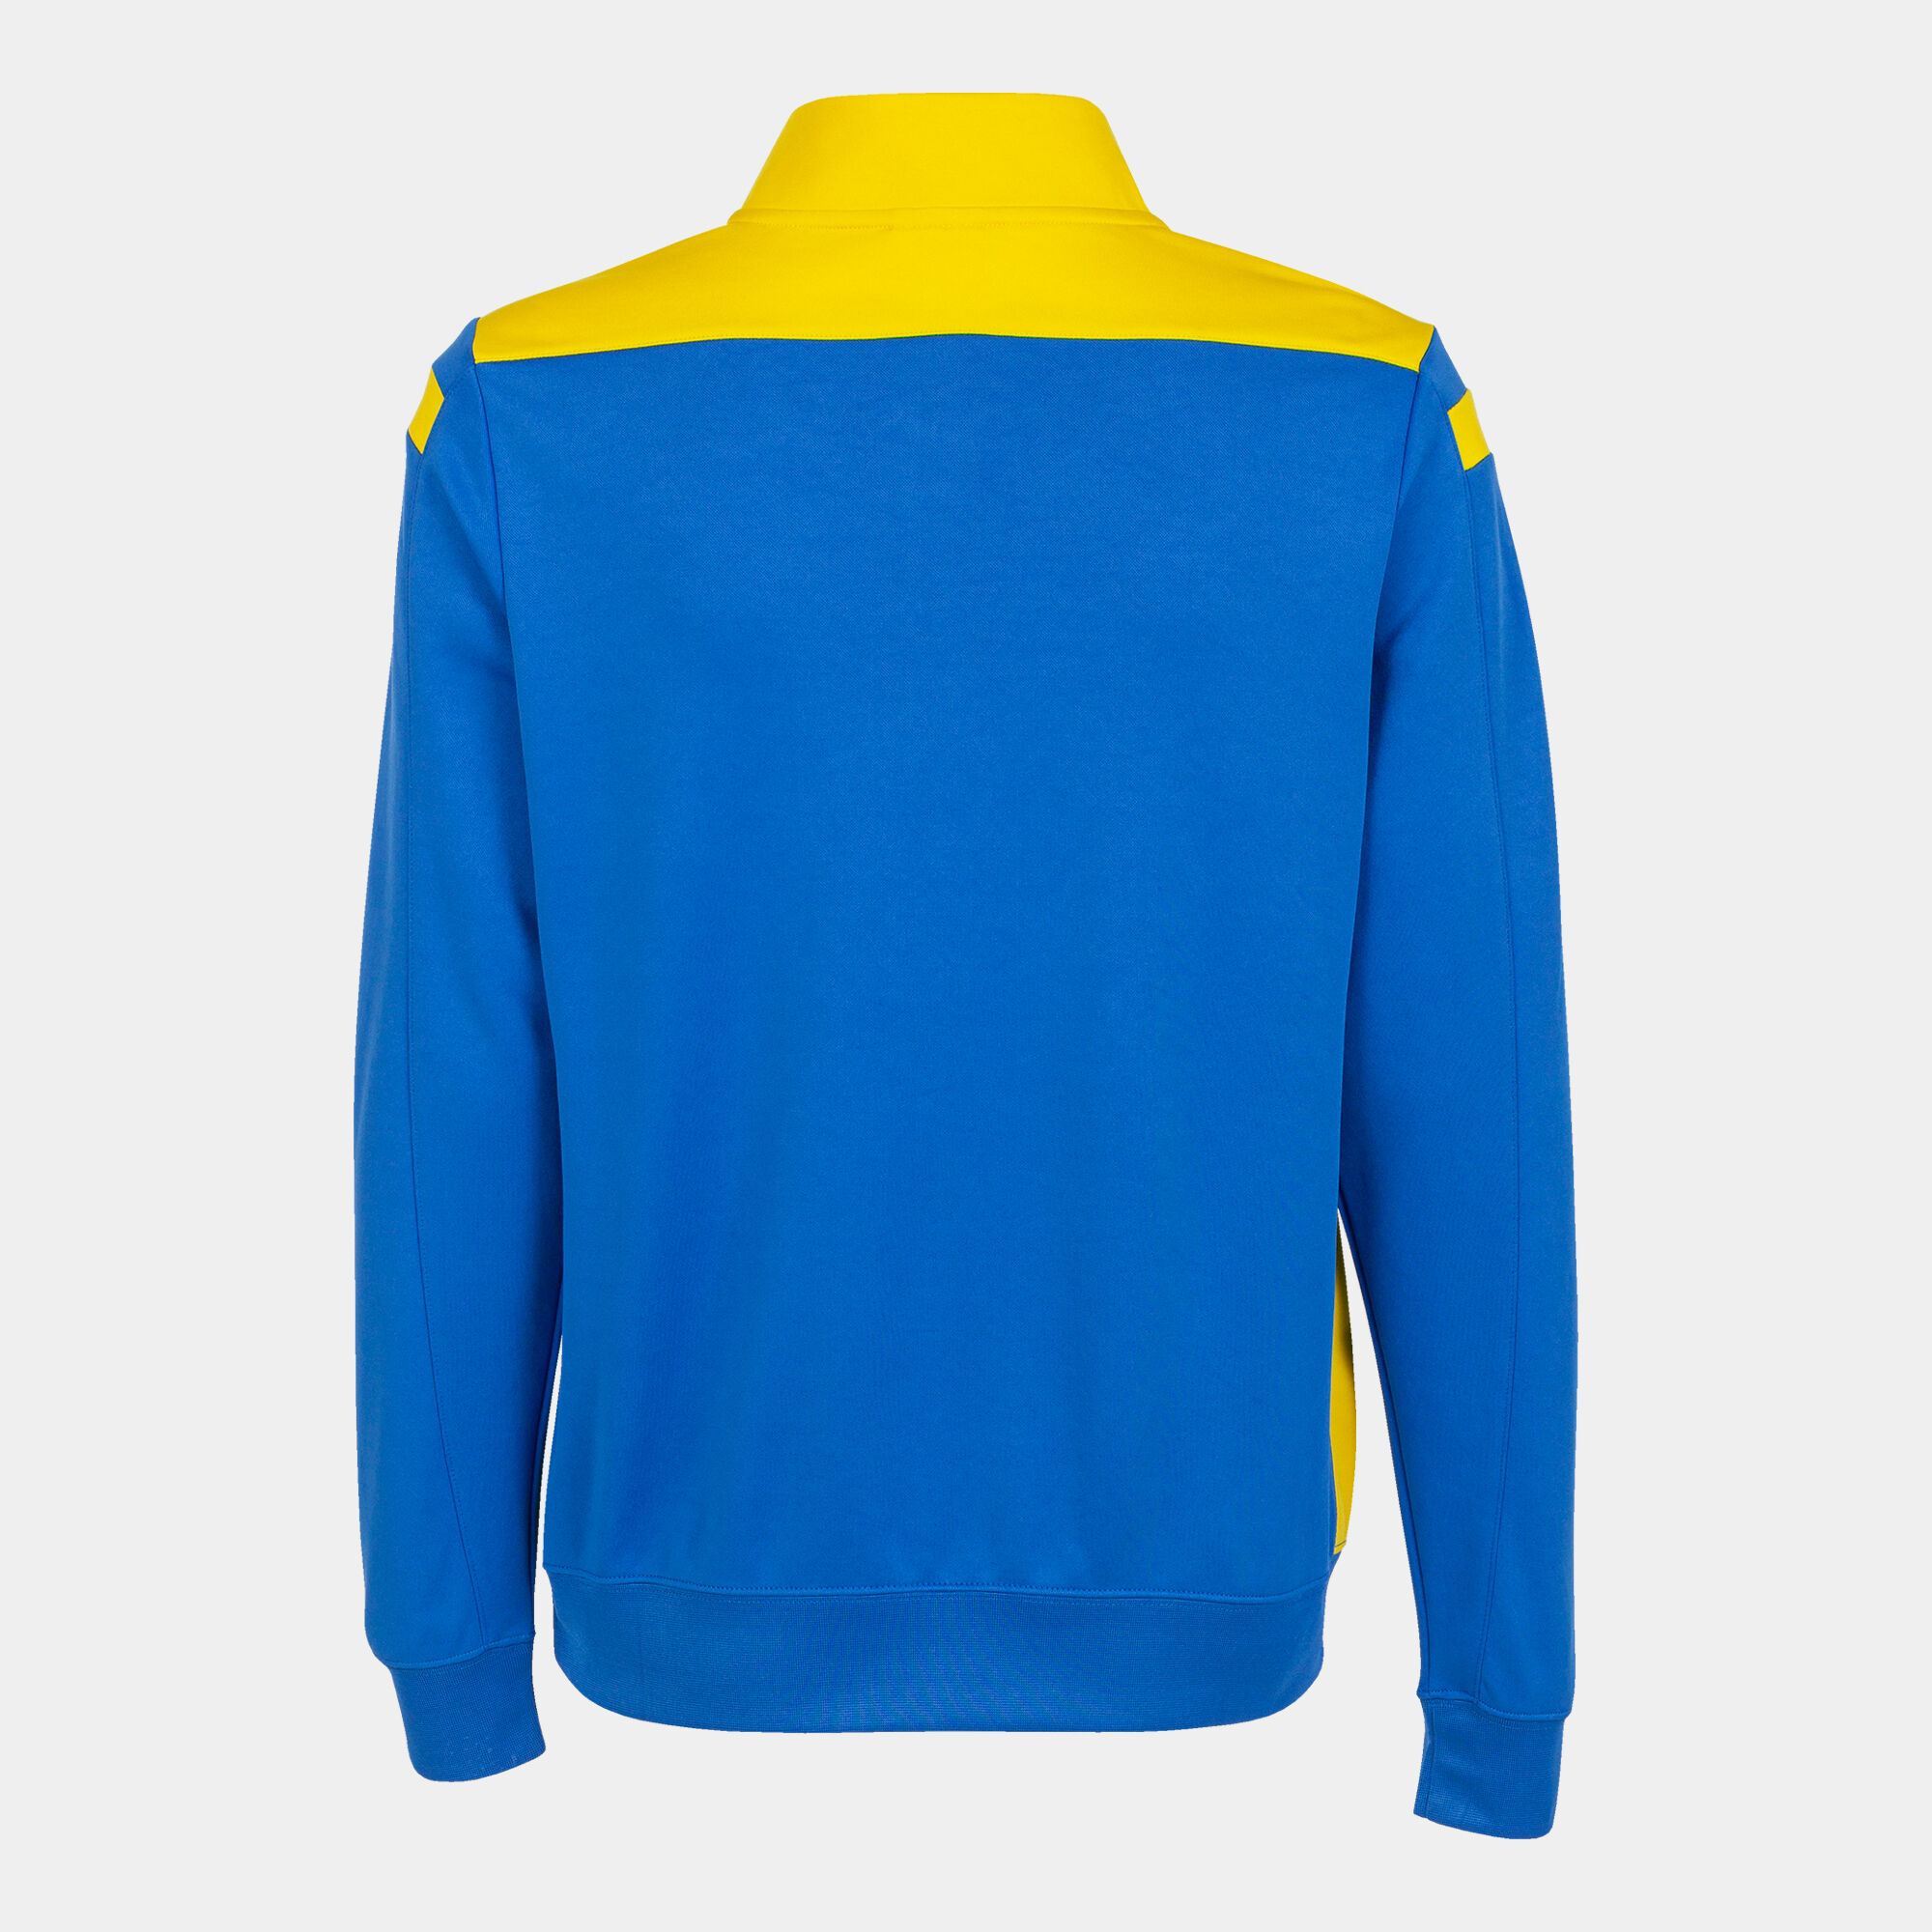 Sweatshirt woman Championship VI royal blue yellow